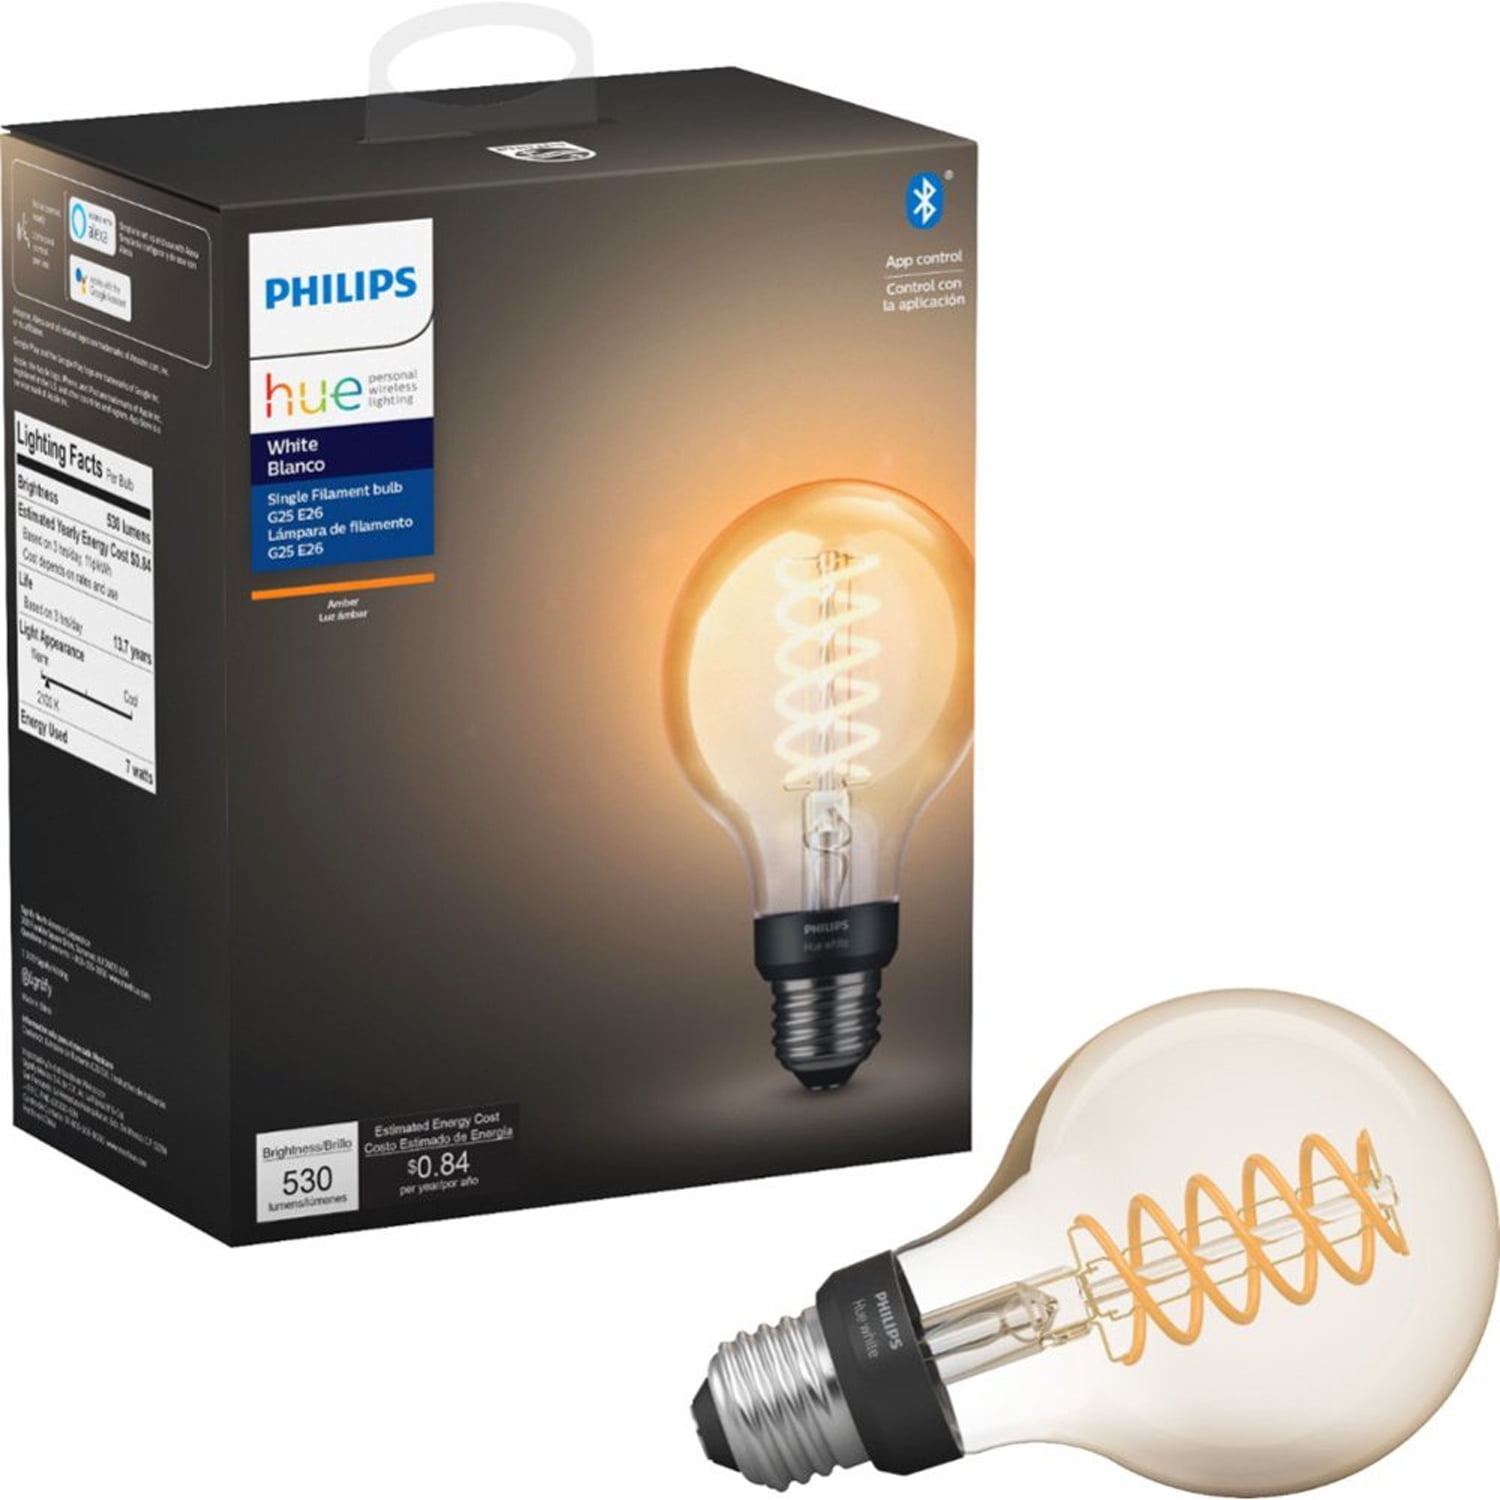 String string zoete smaak zoet Philips Hue White Filament G25 Bluetooth Smart LED Bulb - Amber -  Walmart.com